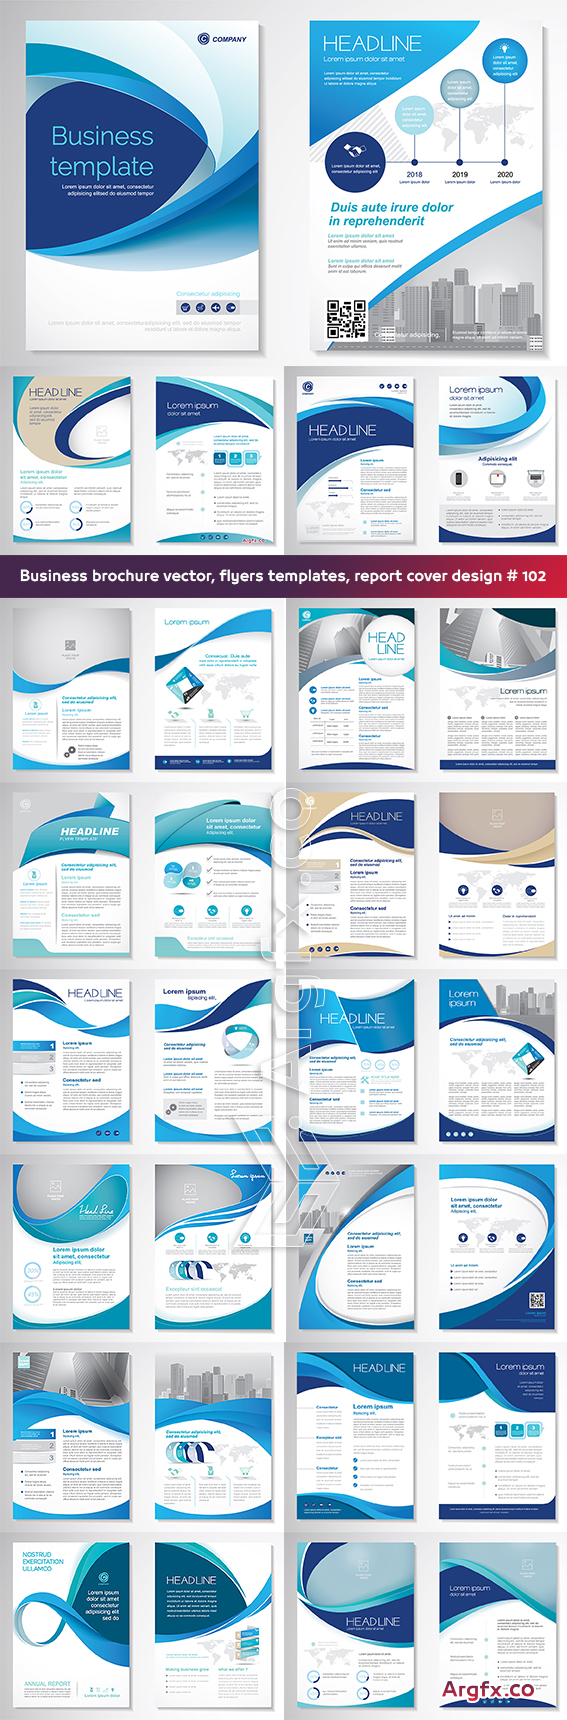  Business brochure vector, flyers templates, report cover design # 102